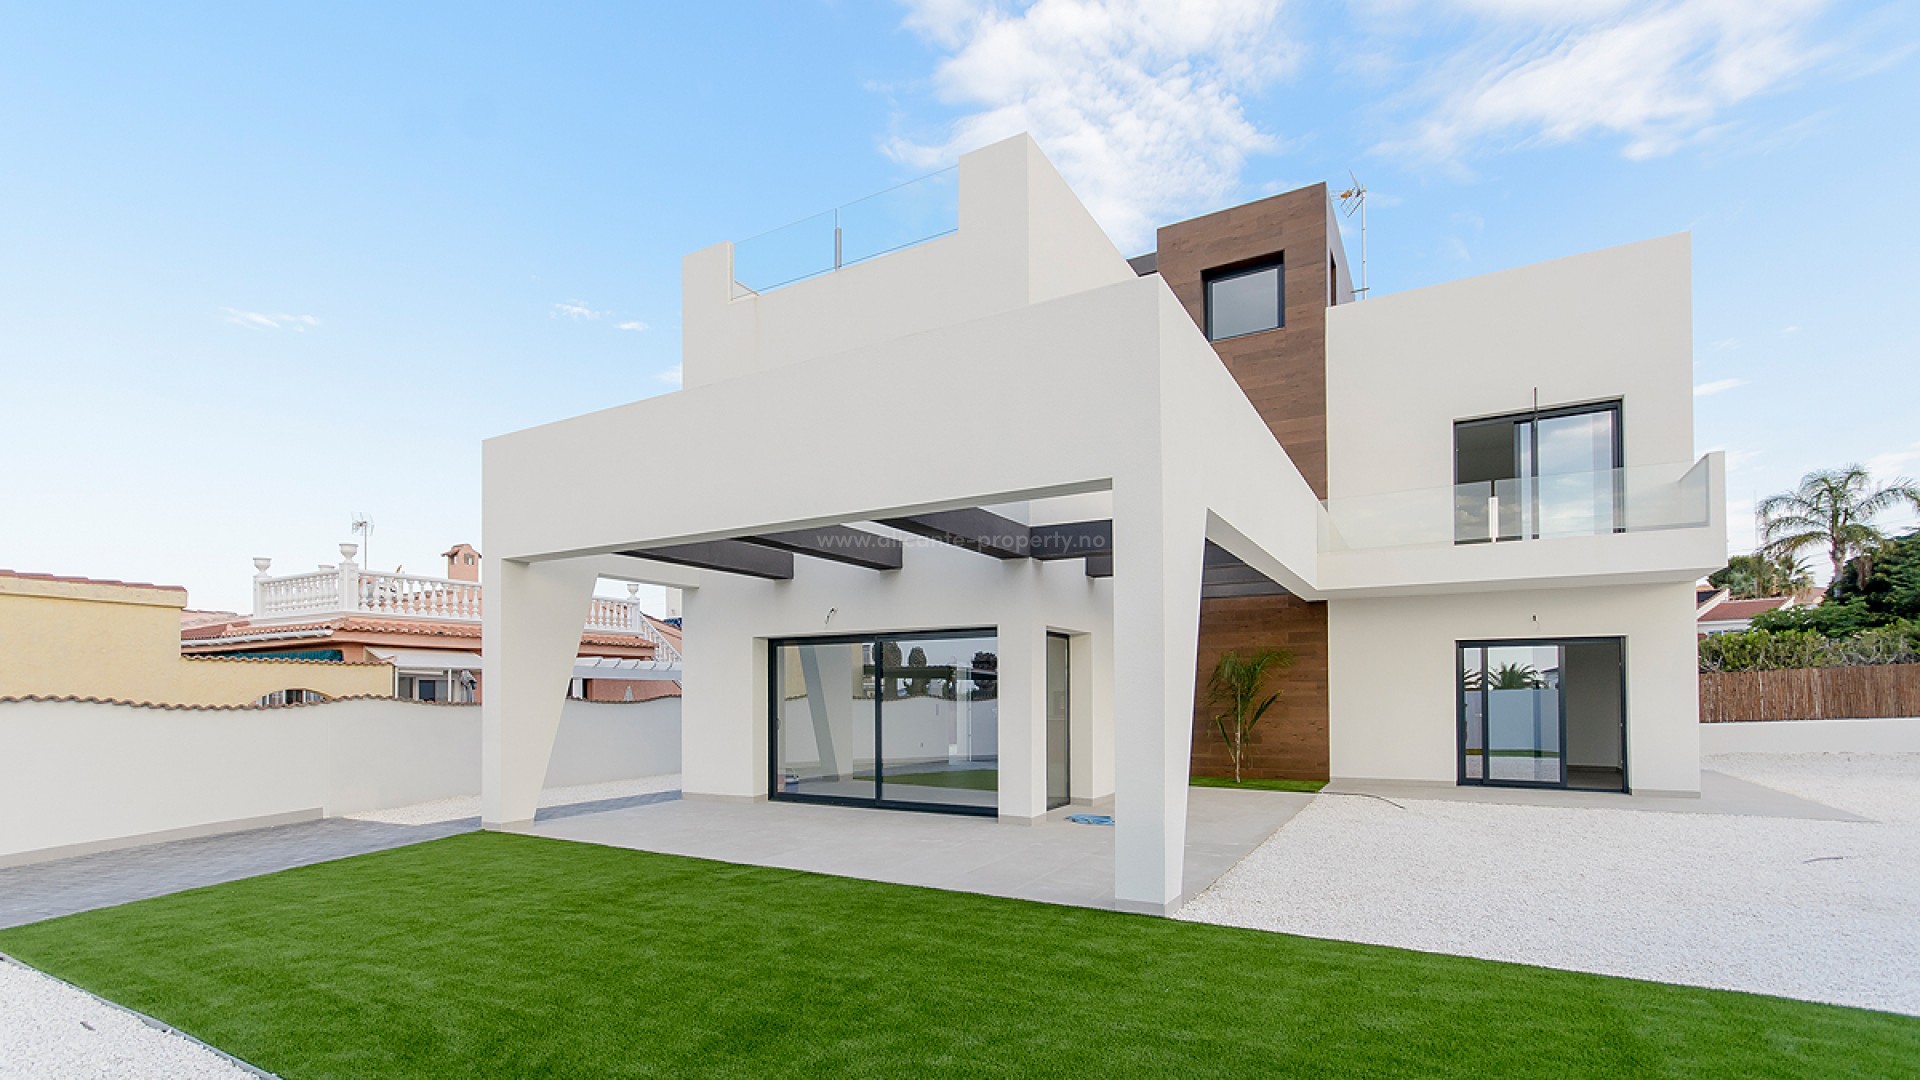 Moderne hus/villa i sentrum av Ciudad Quesada, 10 min fra de vakre strendene i Guardamar del Segura. Alle tjenester veldig nære.